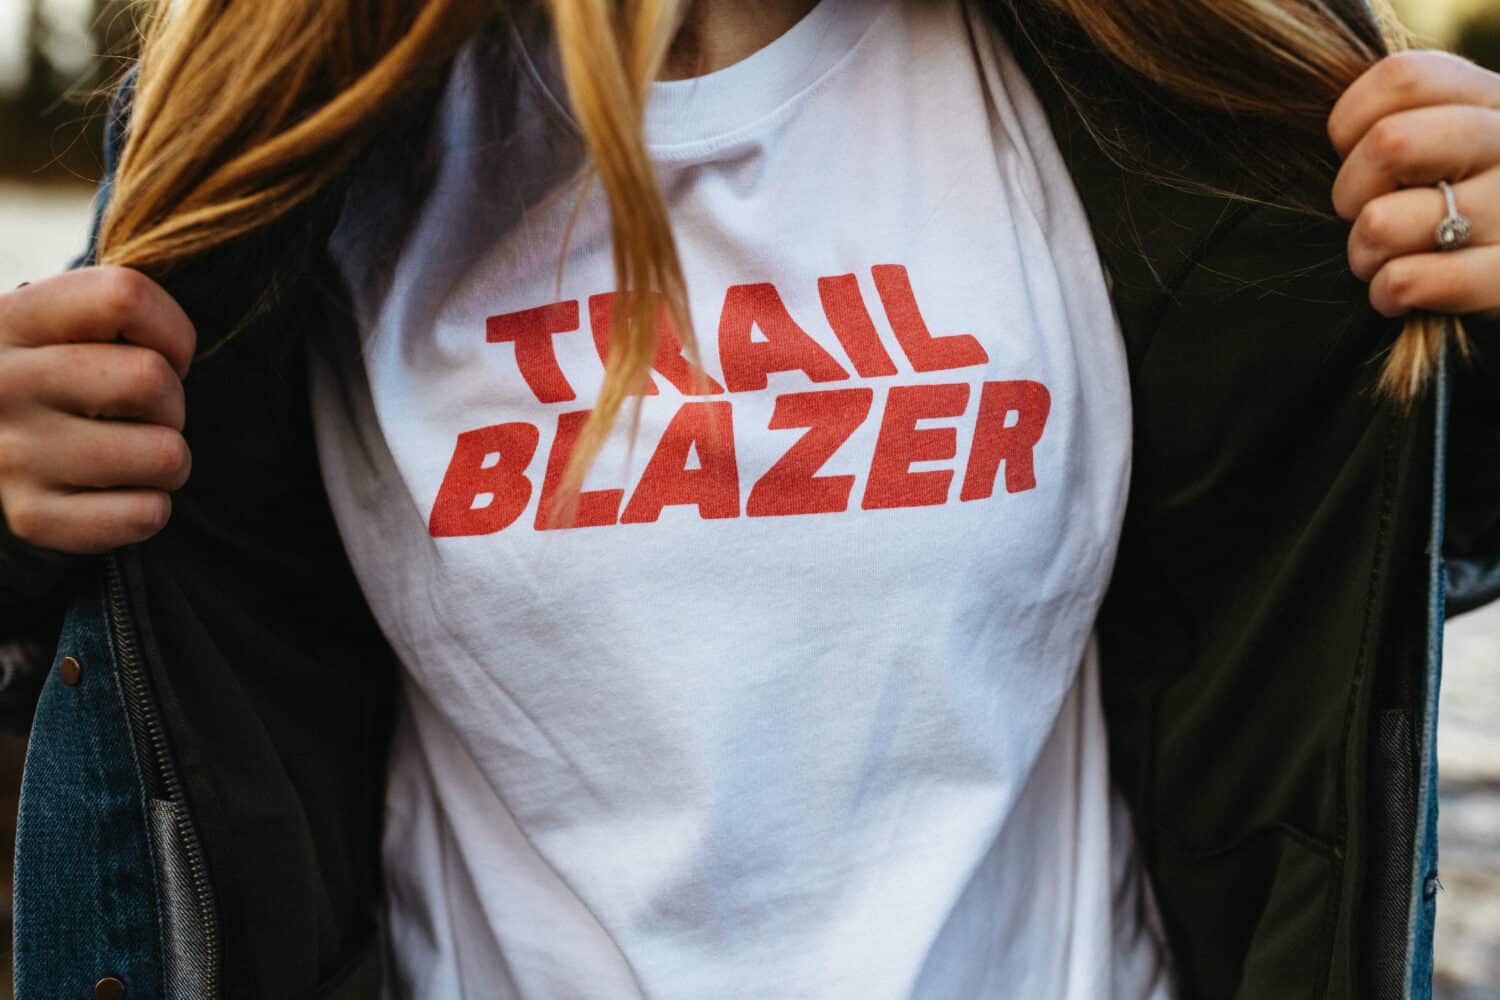 Emily Mandagie in "Trailblazer" T Shirt